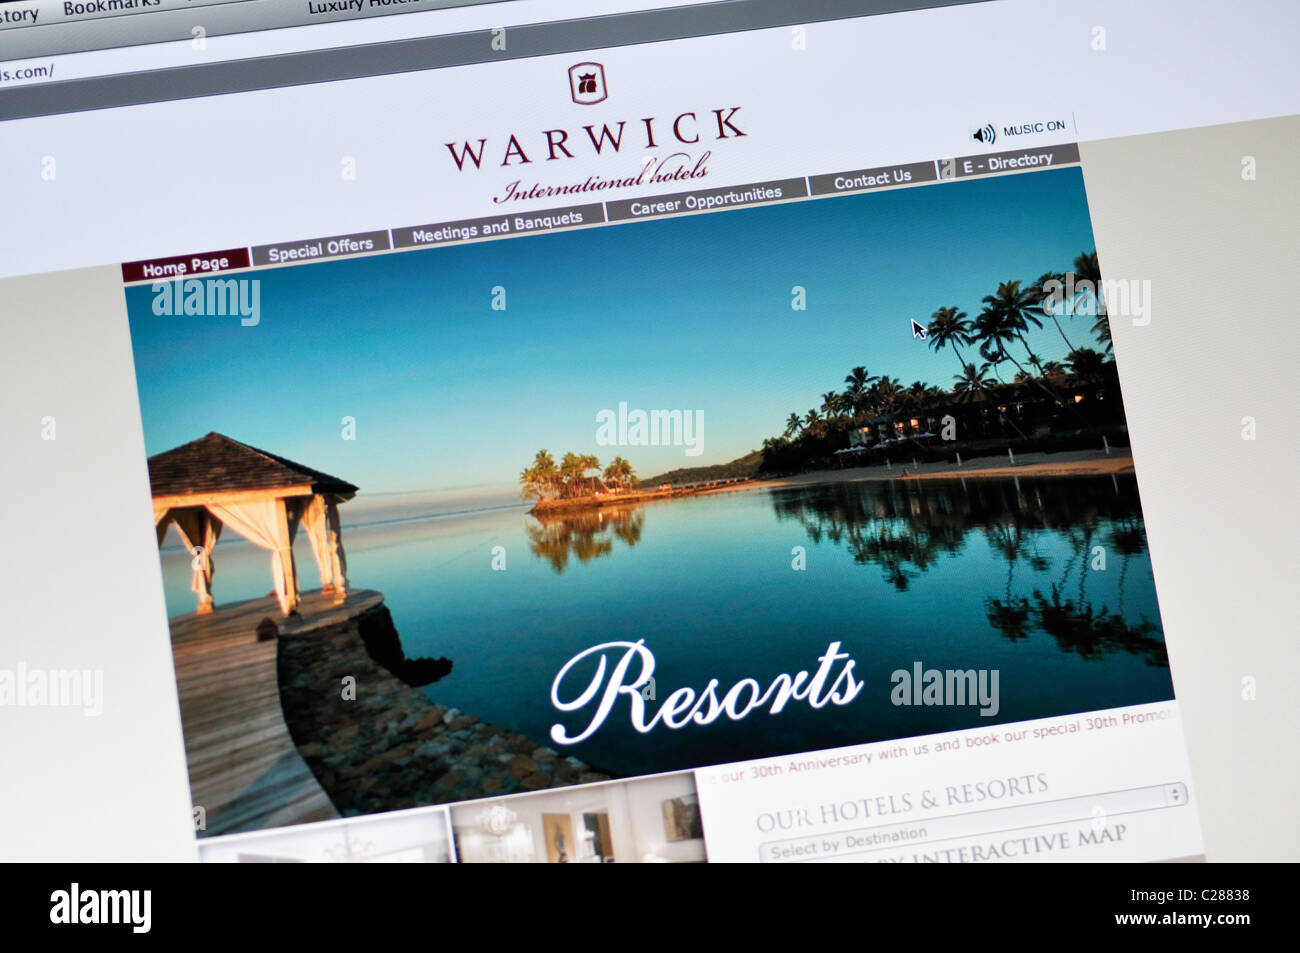 Warwick hotels and resorts website Stock Photo